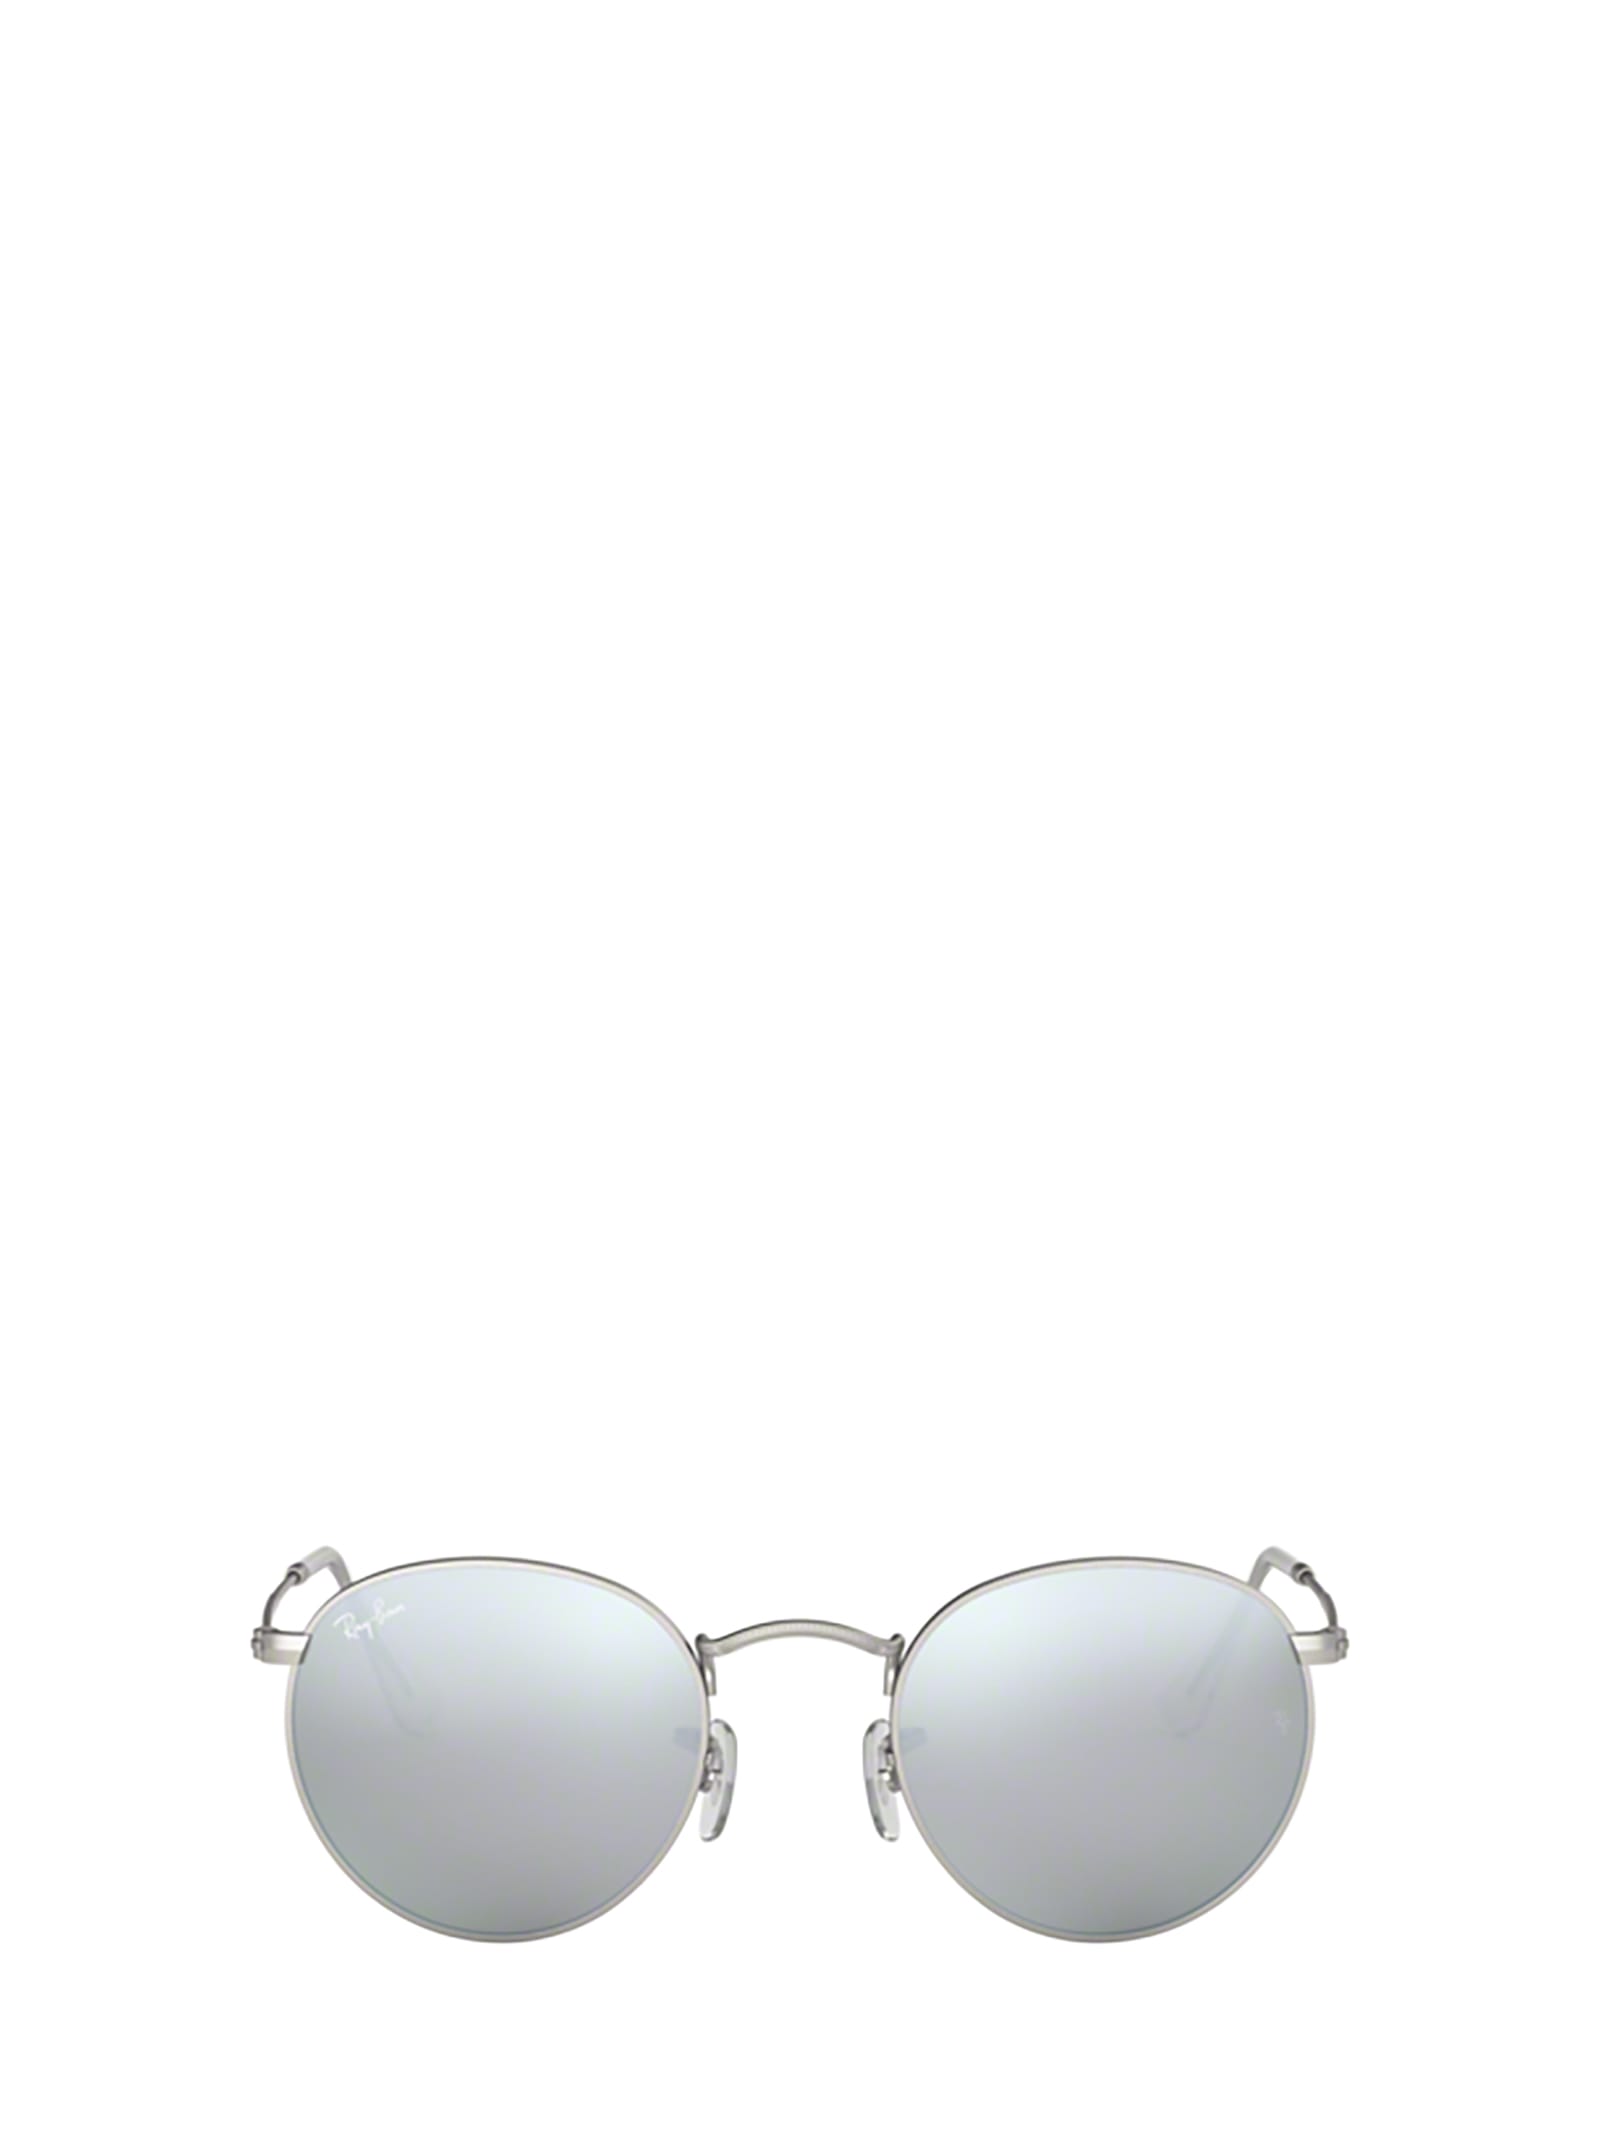 Ray Ban Ray-ban Rb3447 Matte Silver Sunglasses